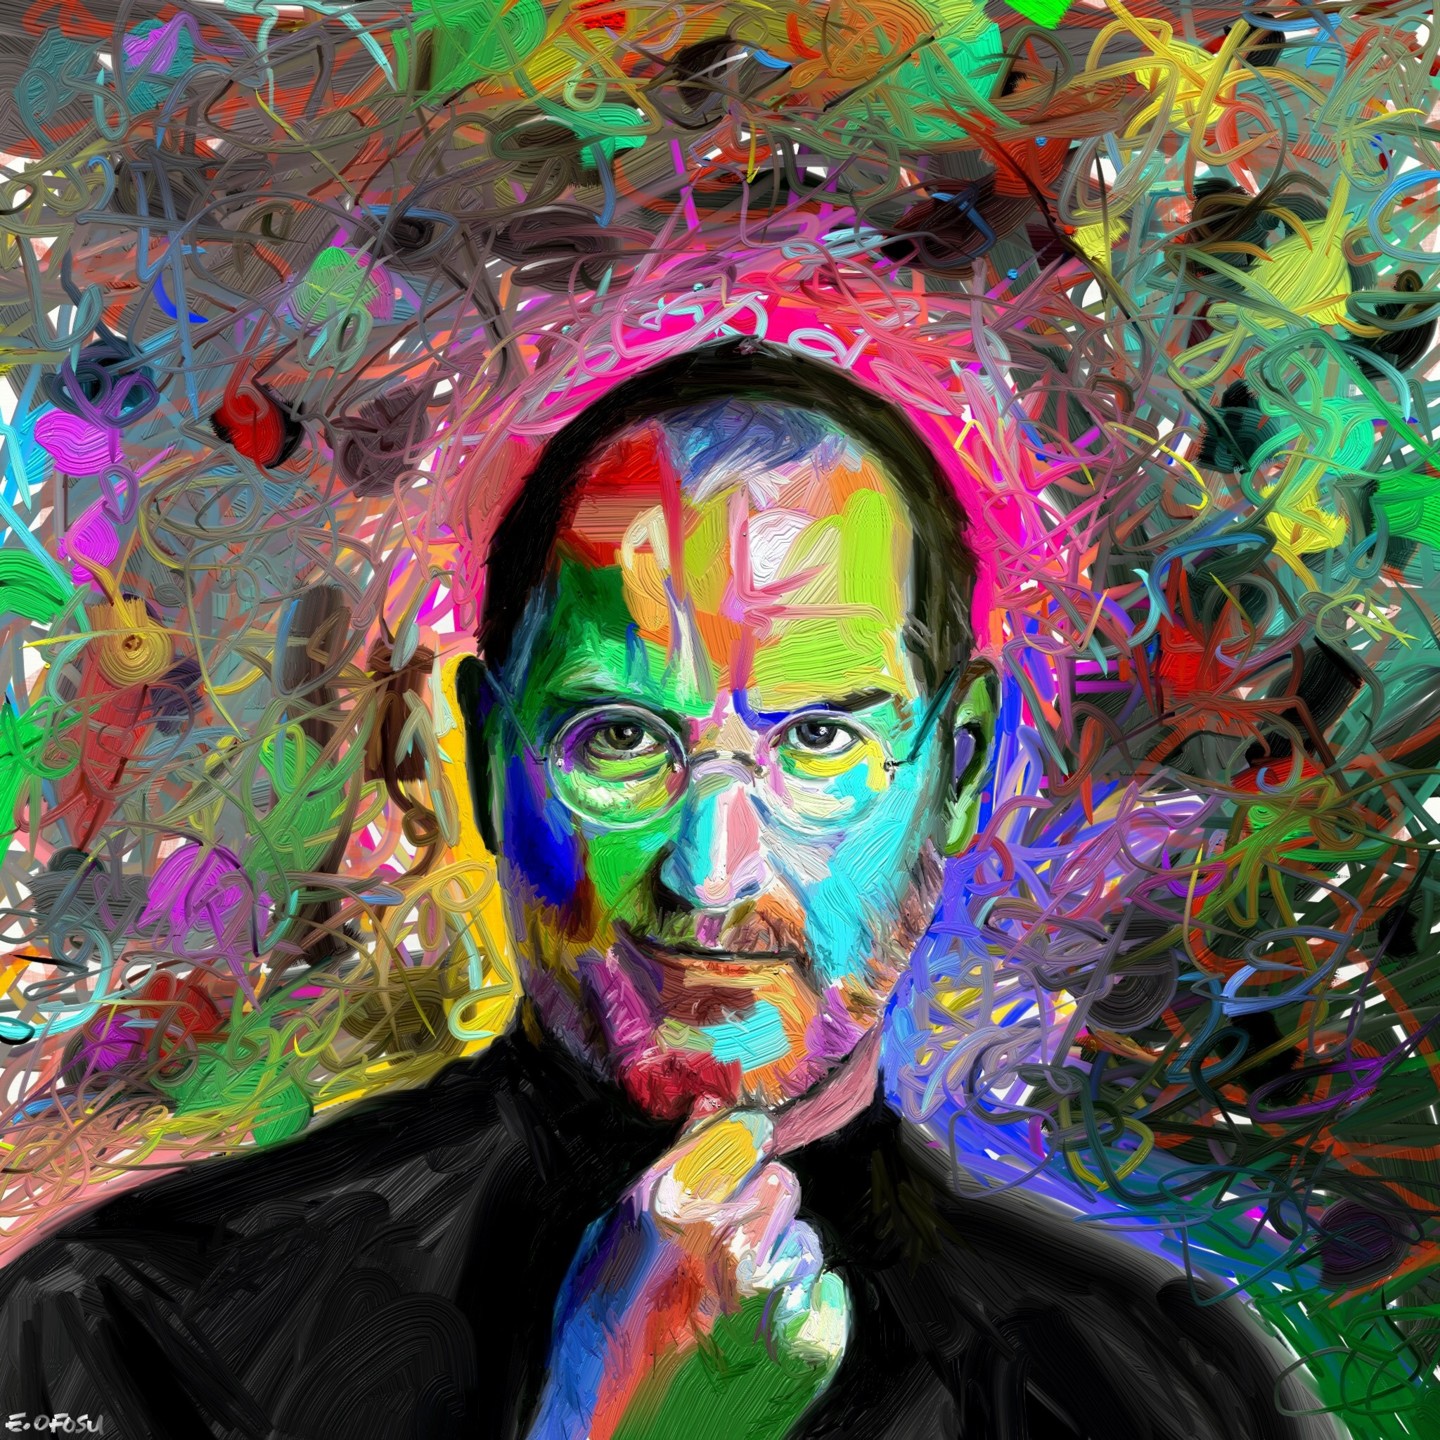 Steve Jobs, a digital artwork by Edward Ofosu on Artmajeur